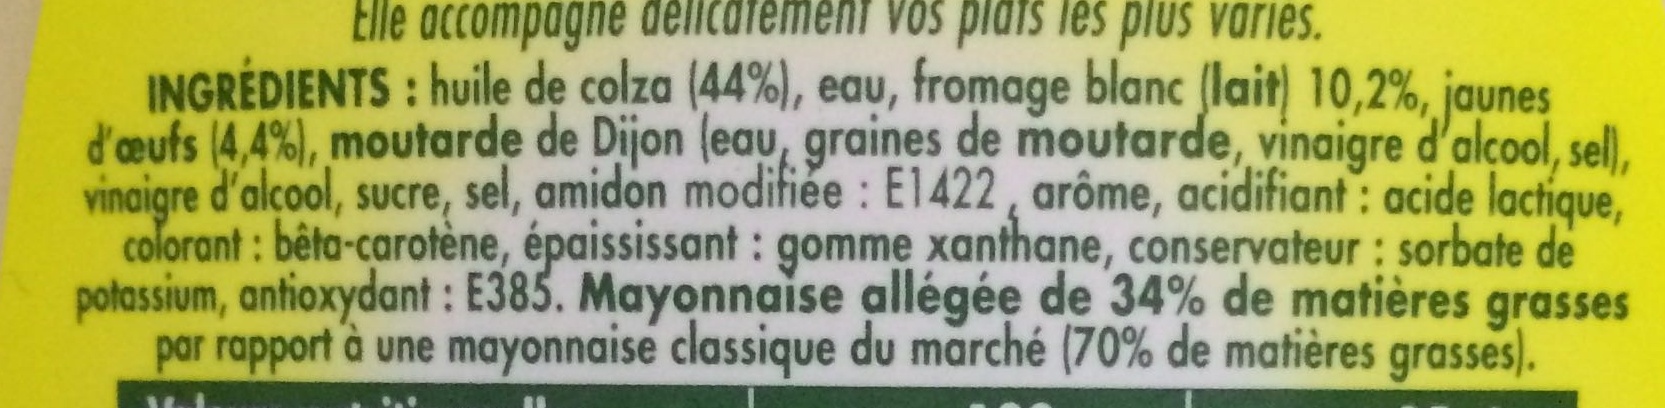 Mayonnaise légère La Veloutée - Ingrediënten - fr